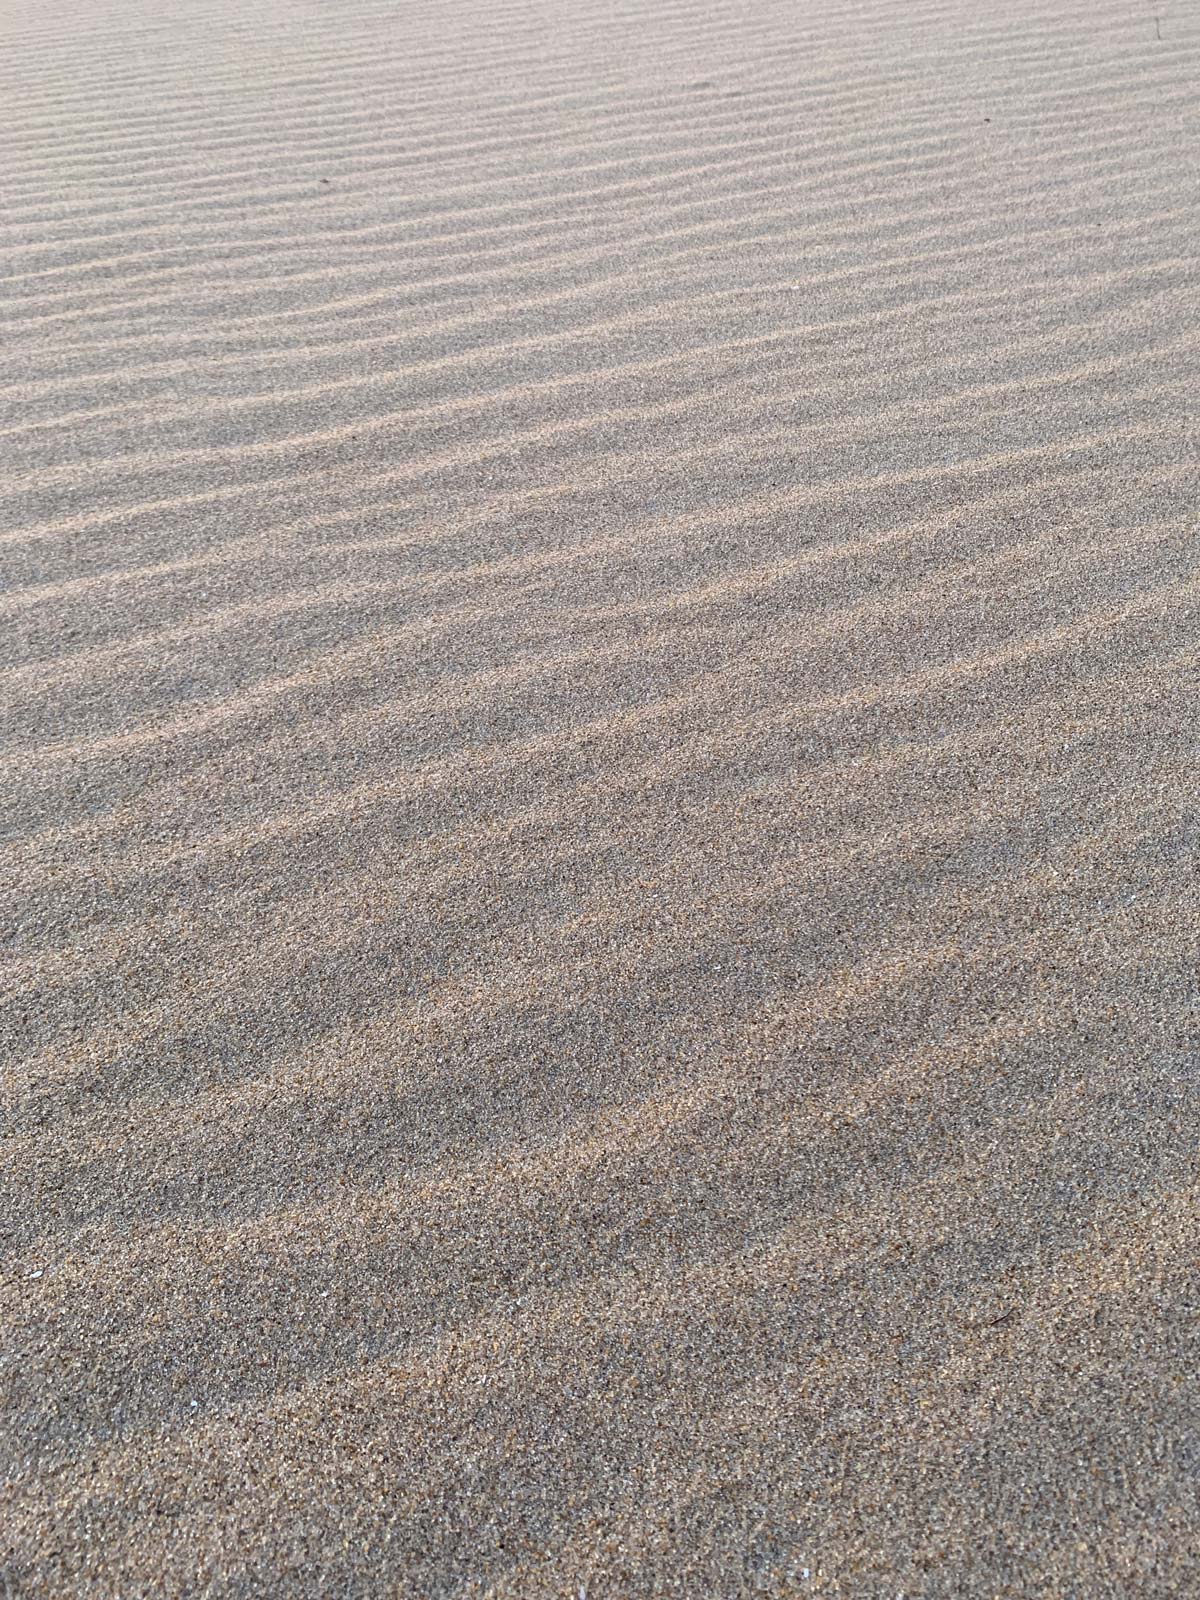 sand ripples wind texture beach